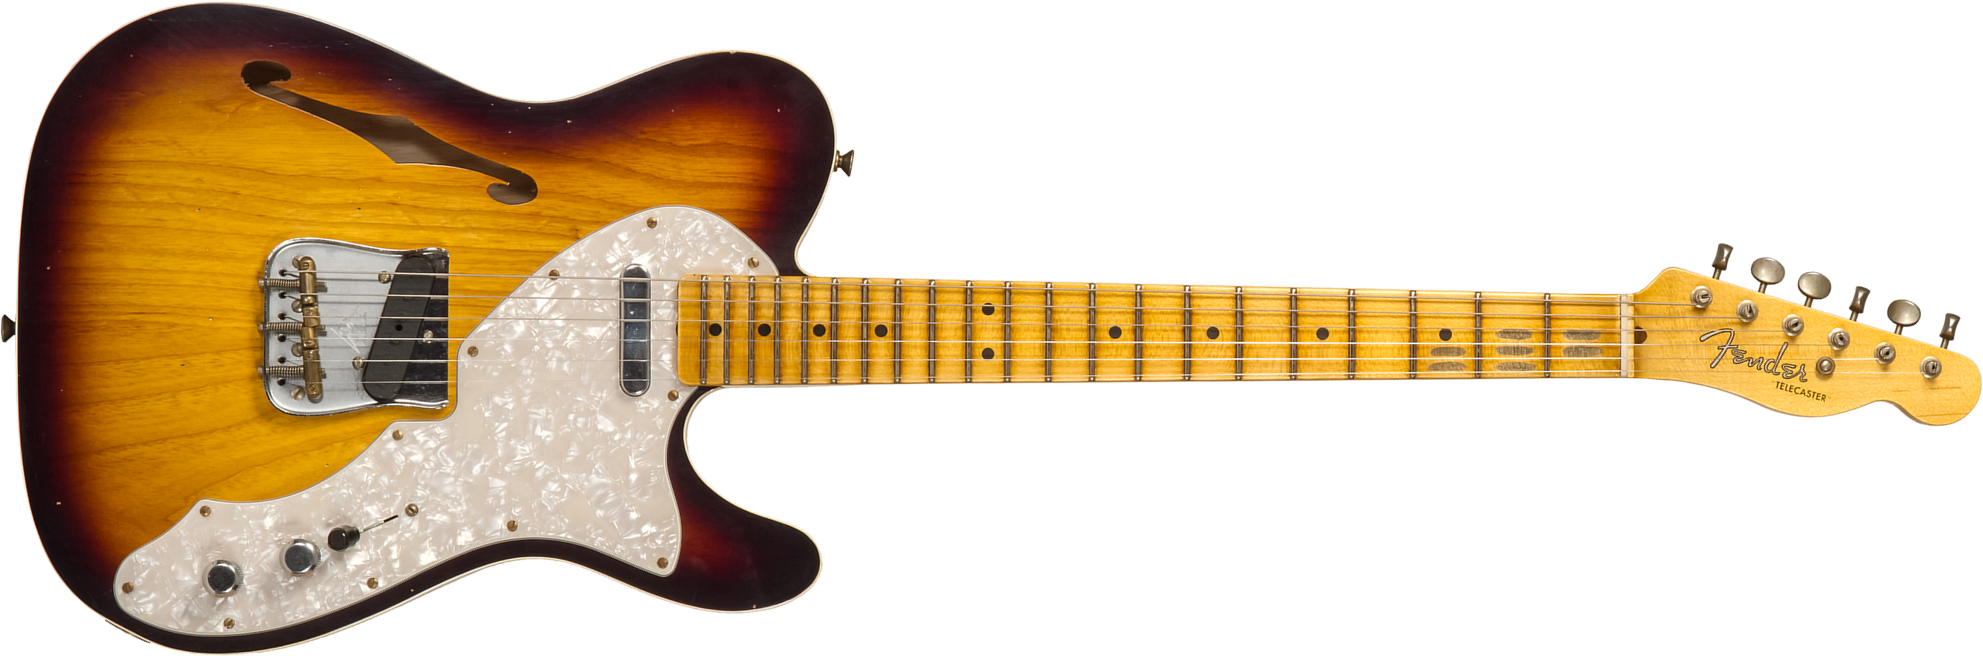 Fender Custom Shop Tele Thinline 50s Mn #cz574212 - Journeyman Relic Aged 2-color Sunburst - E-Gitarre in Teleform - Main picture